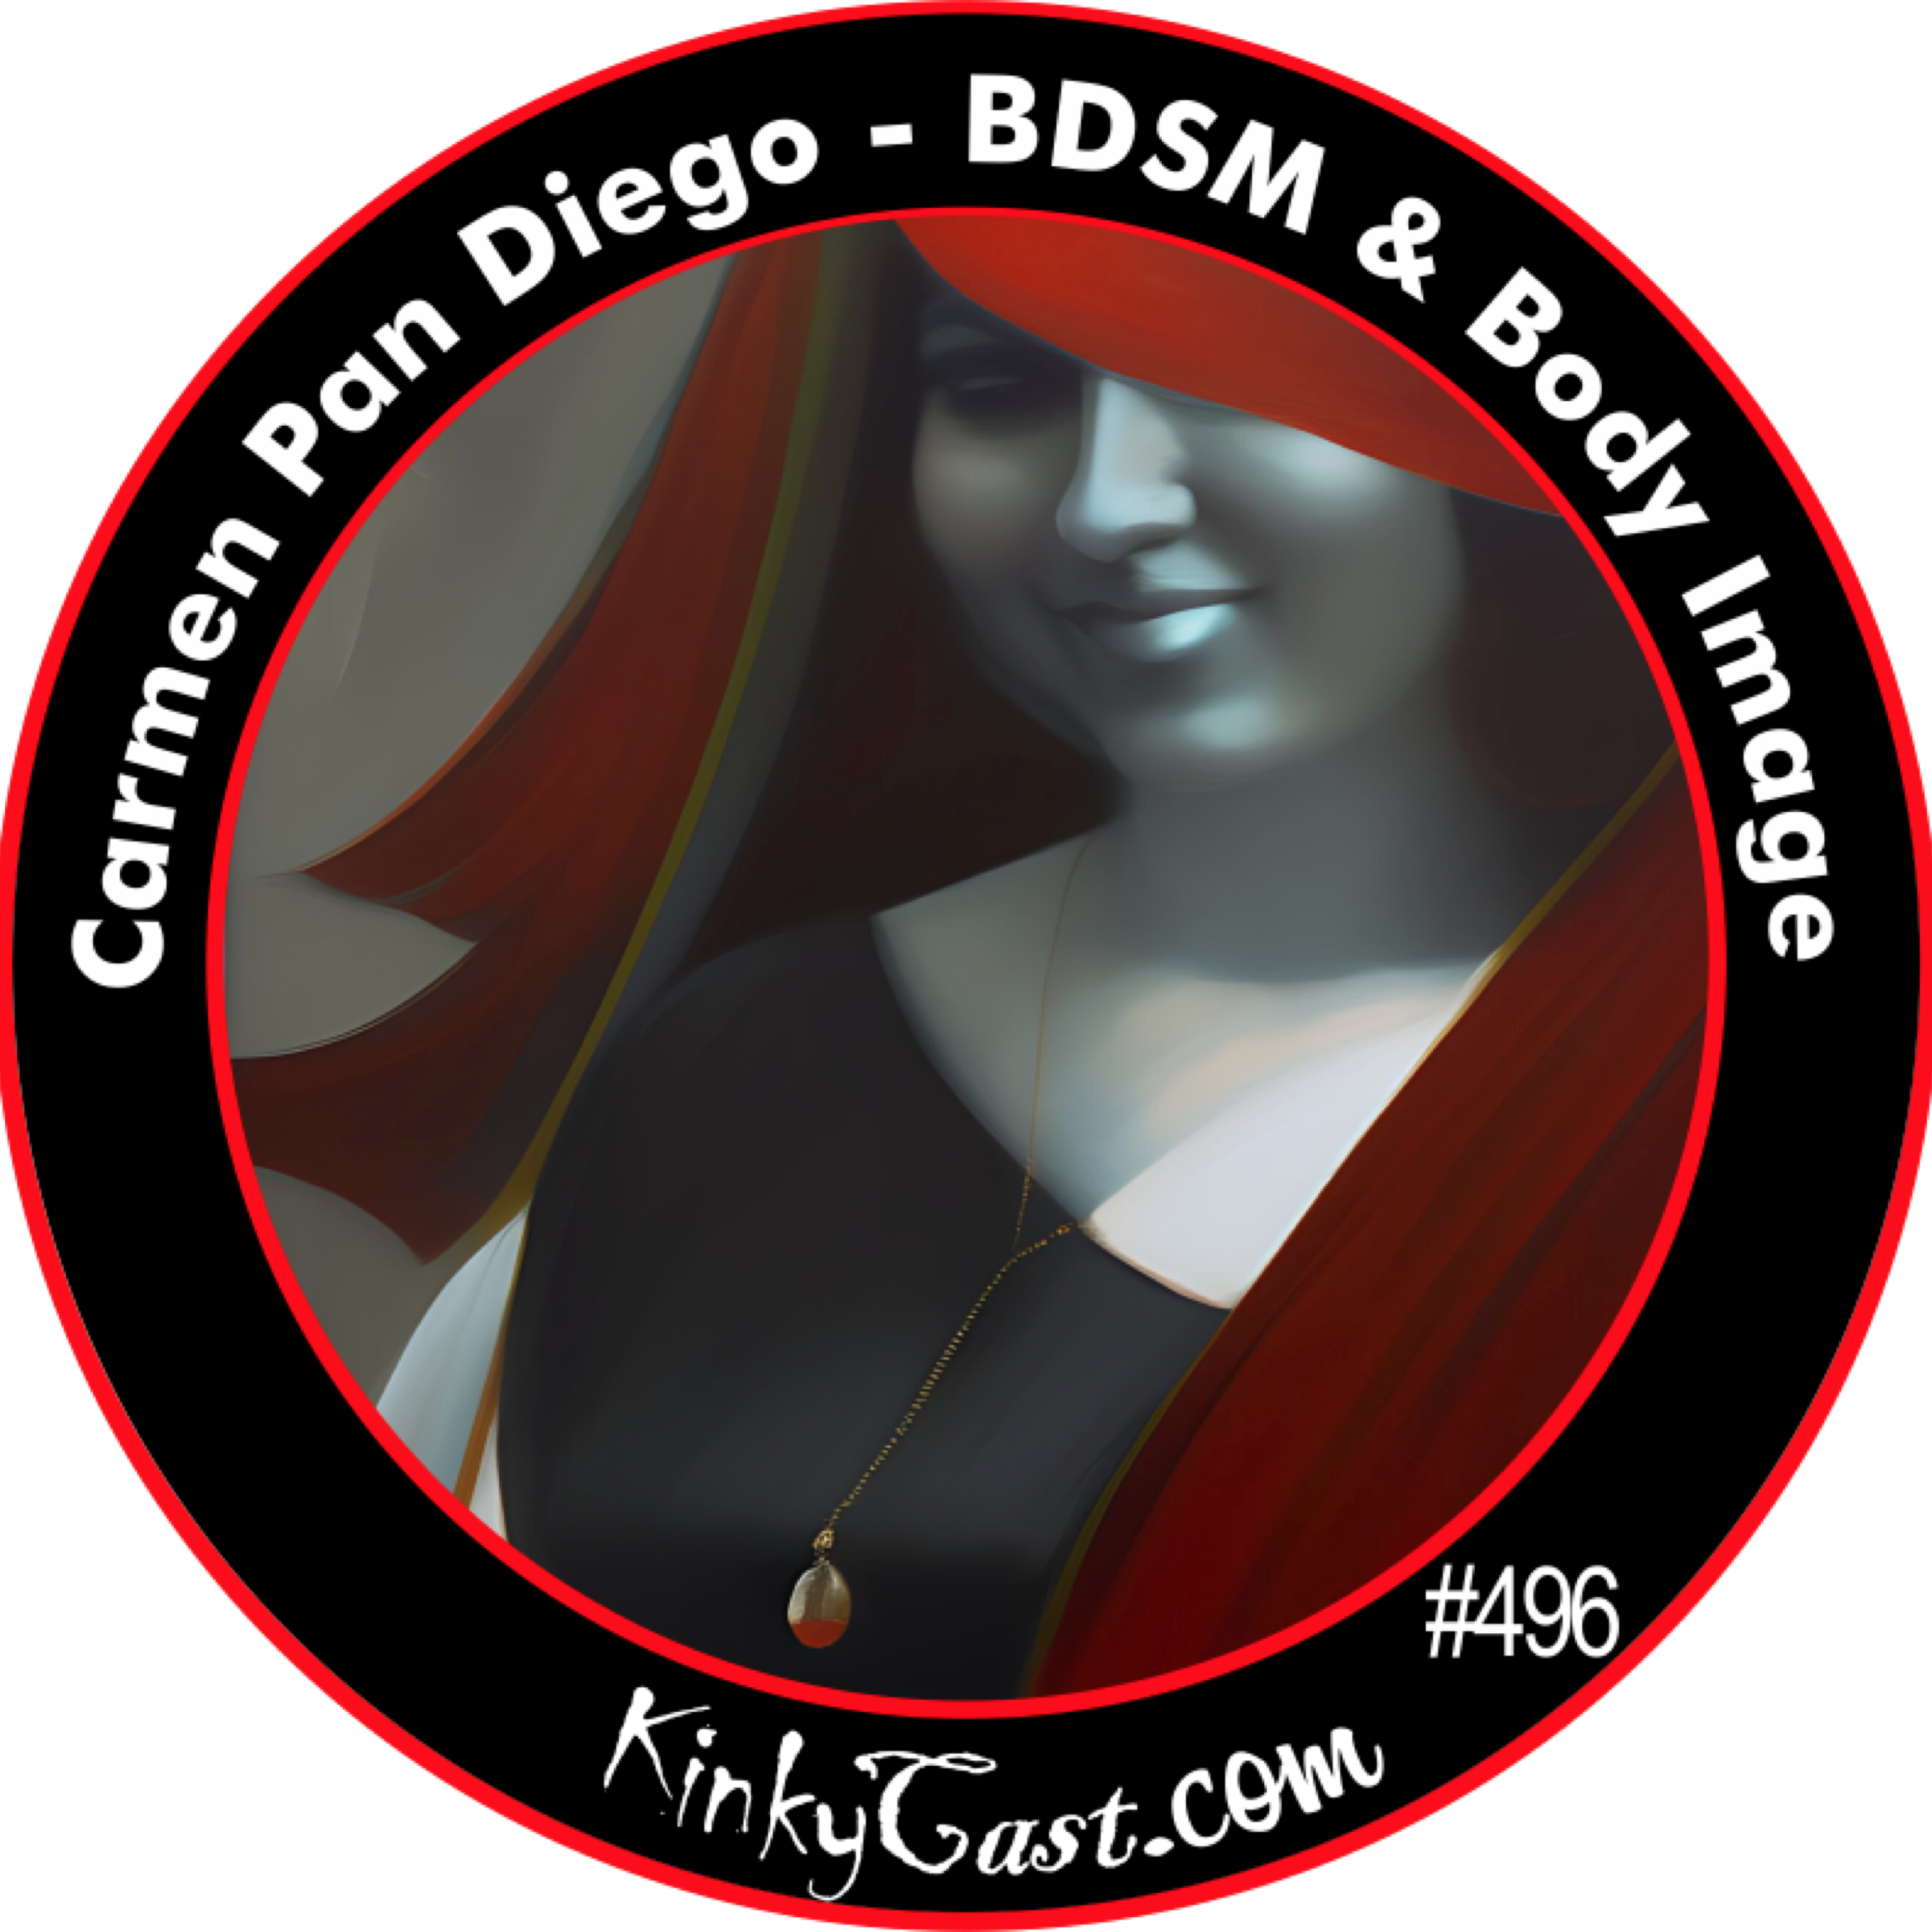 #497 - Carmen Pan Diego - BDSM & Body Image